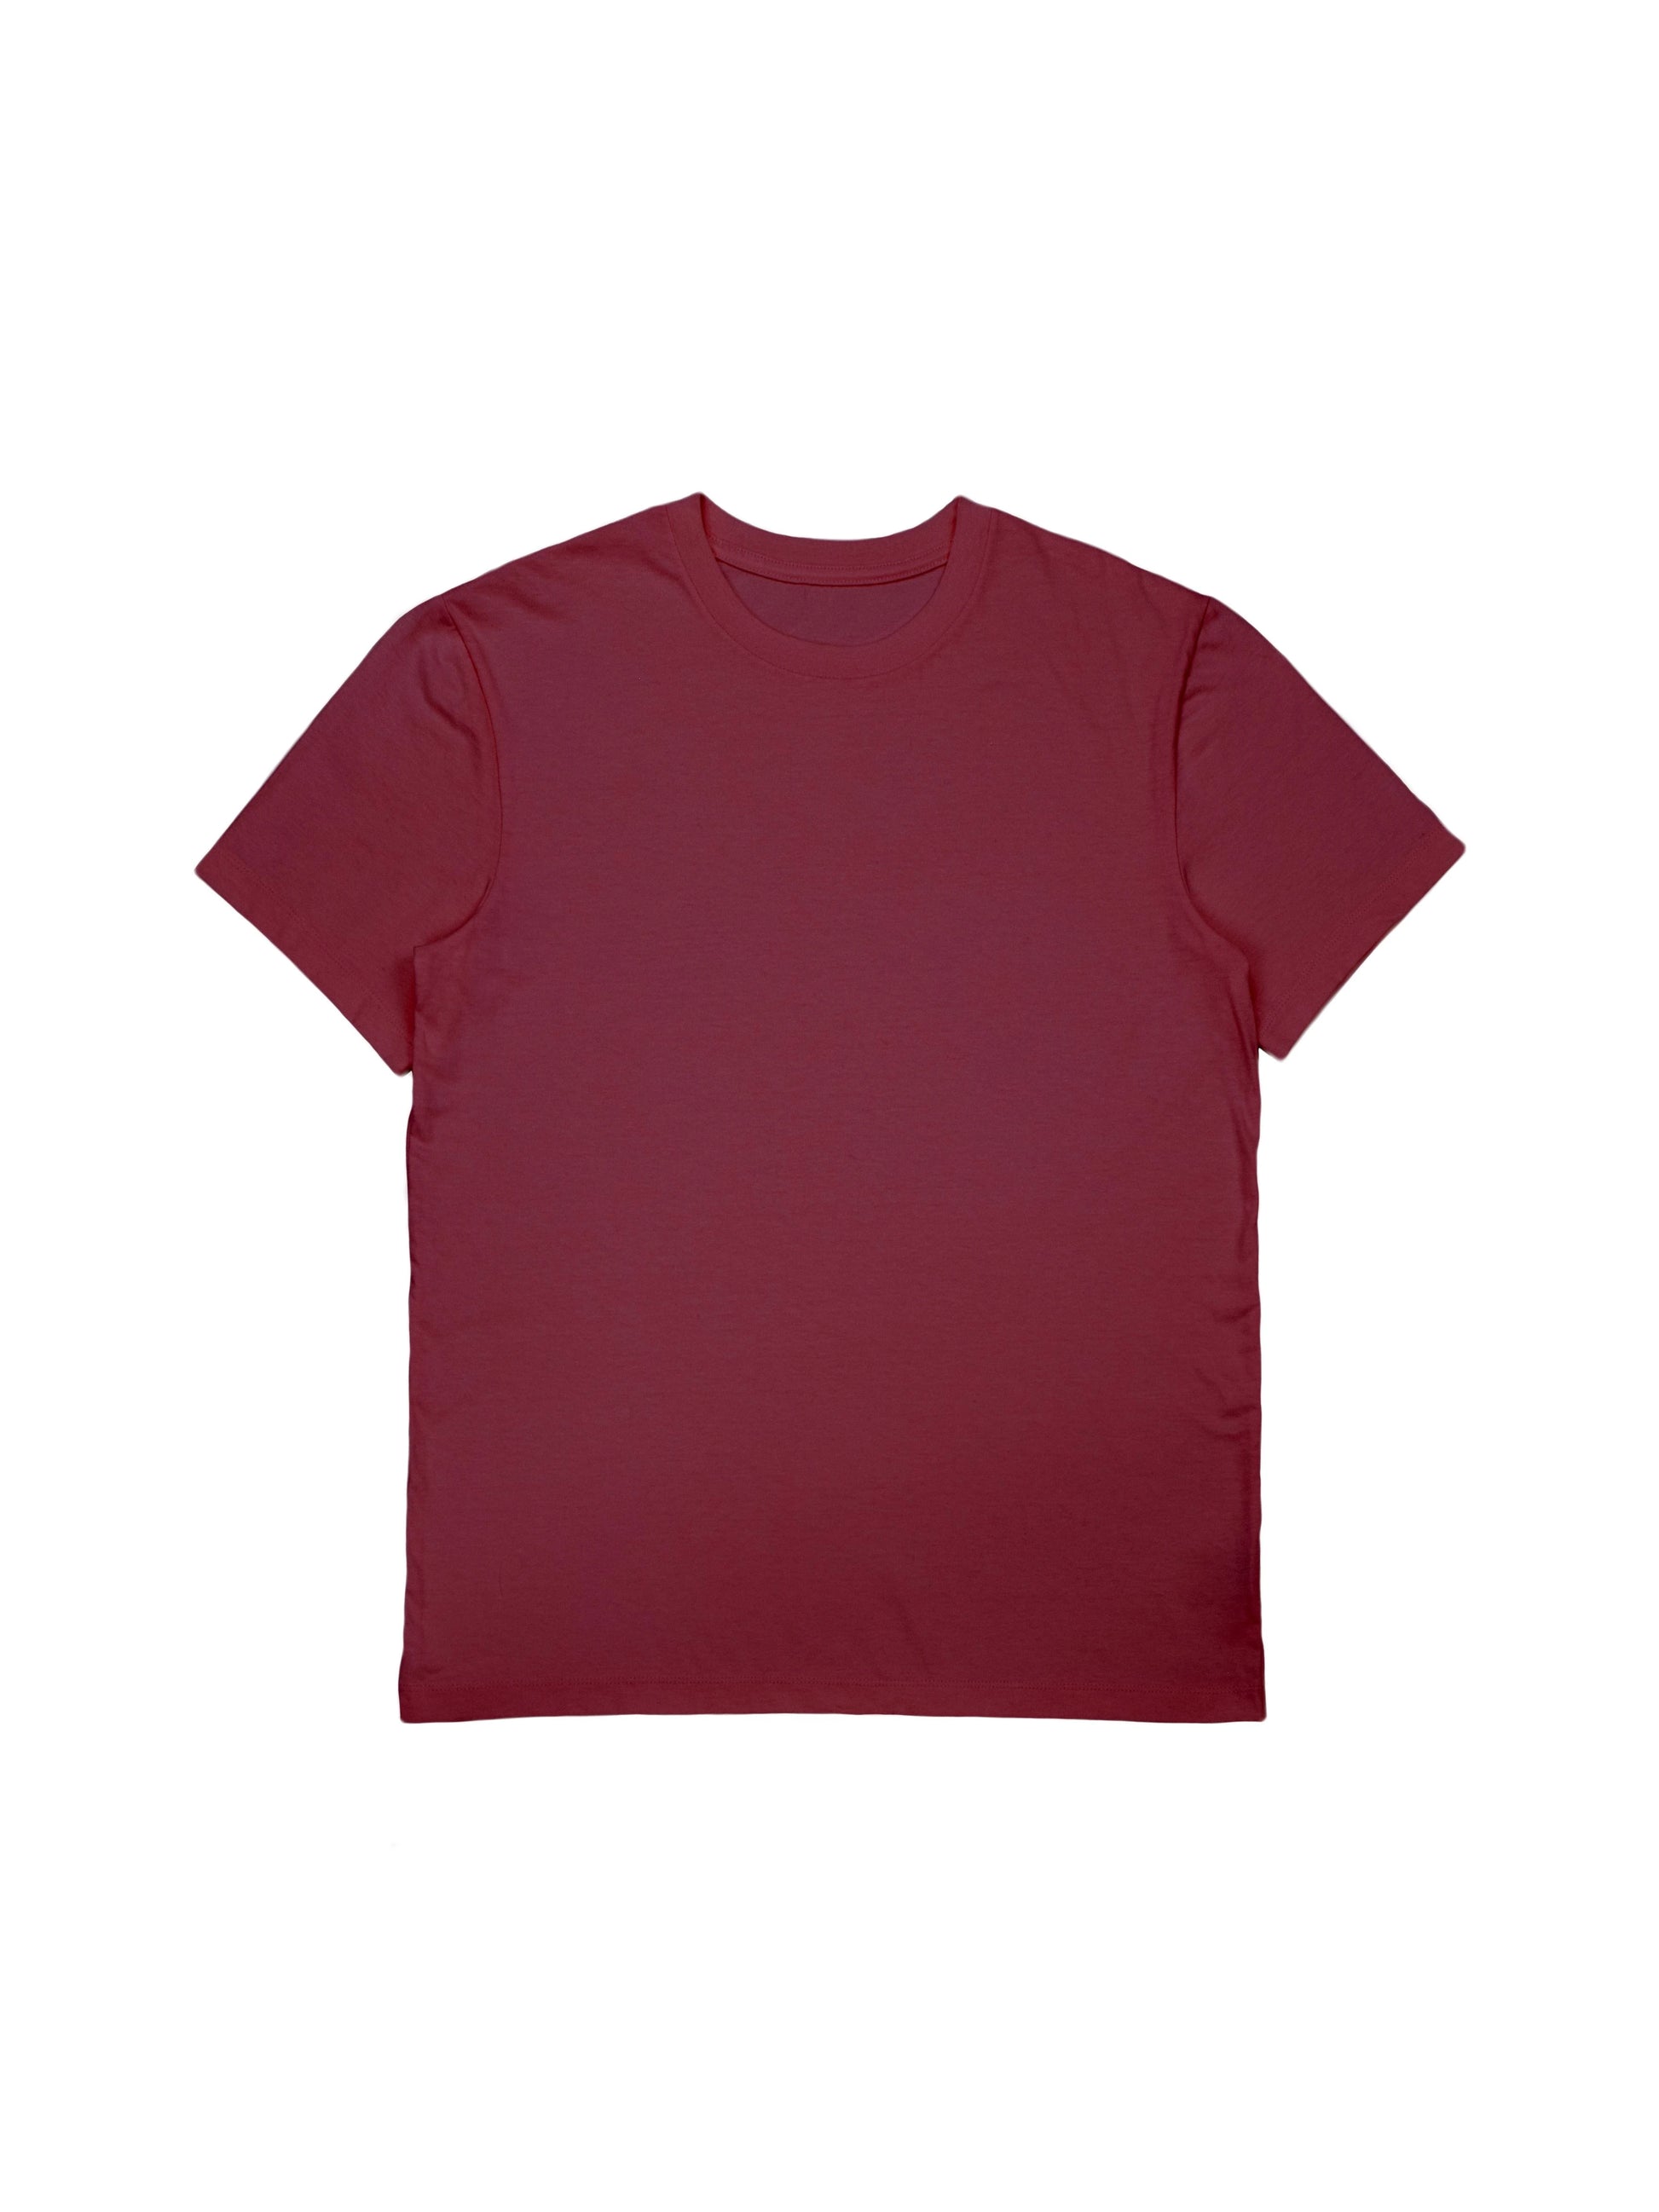 Scoop neck ribbed T-shirt, Le 31, Shop Men's Short Sleeve & 3/4 Sleeve  T-Shirts